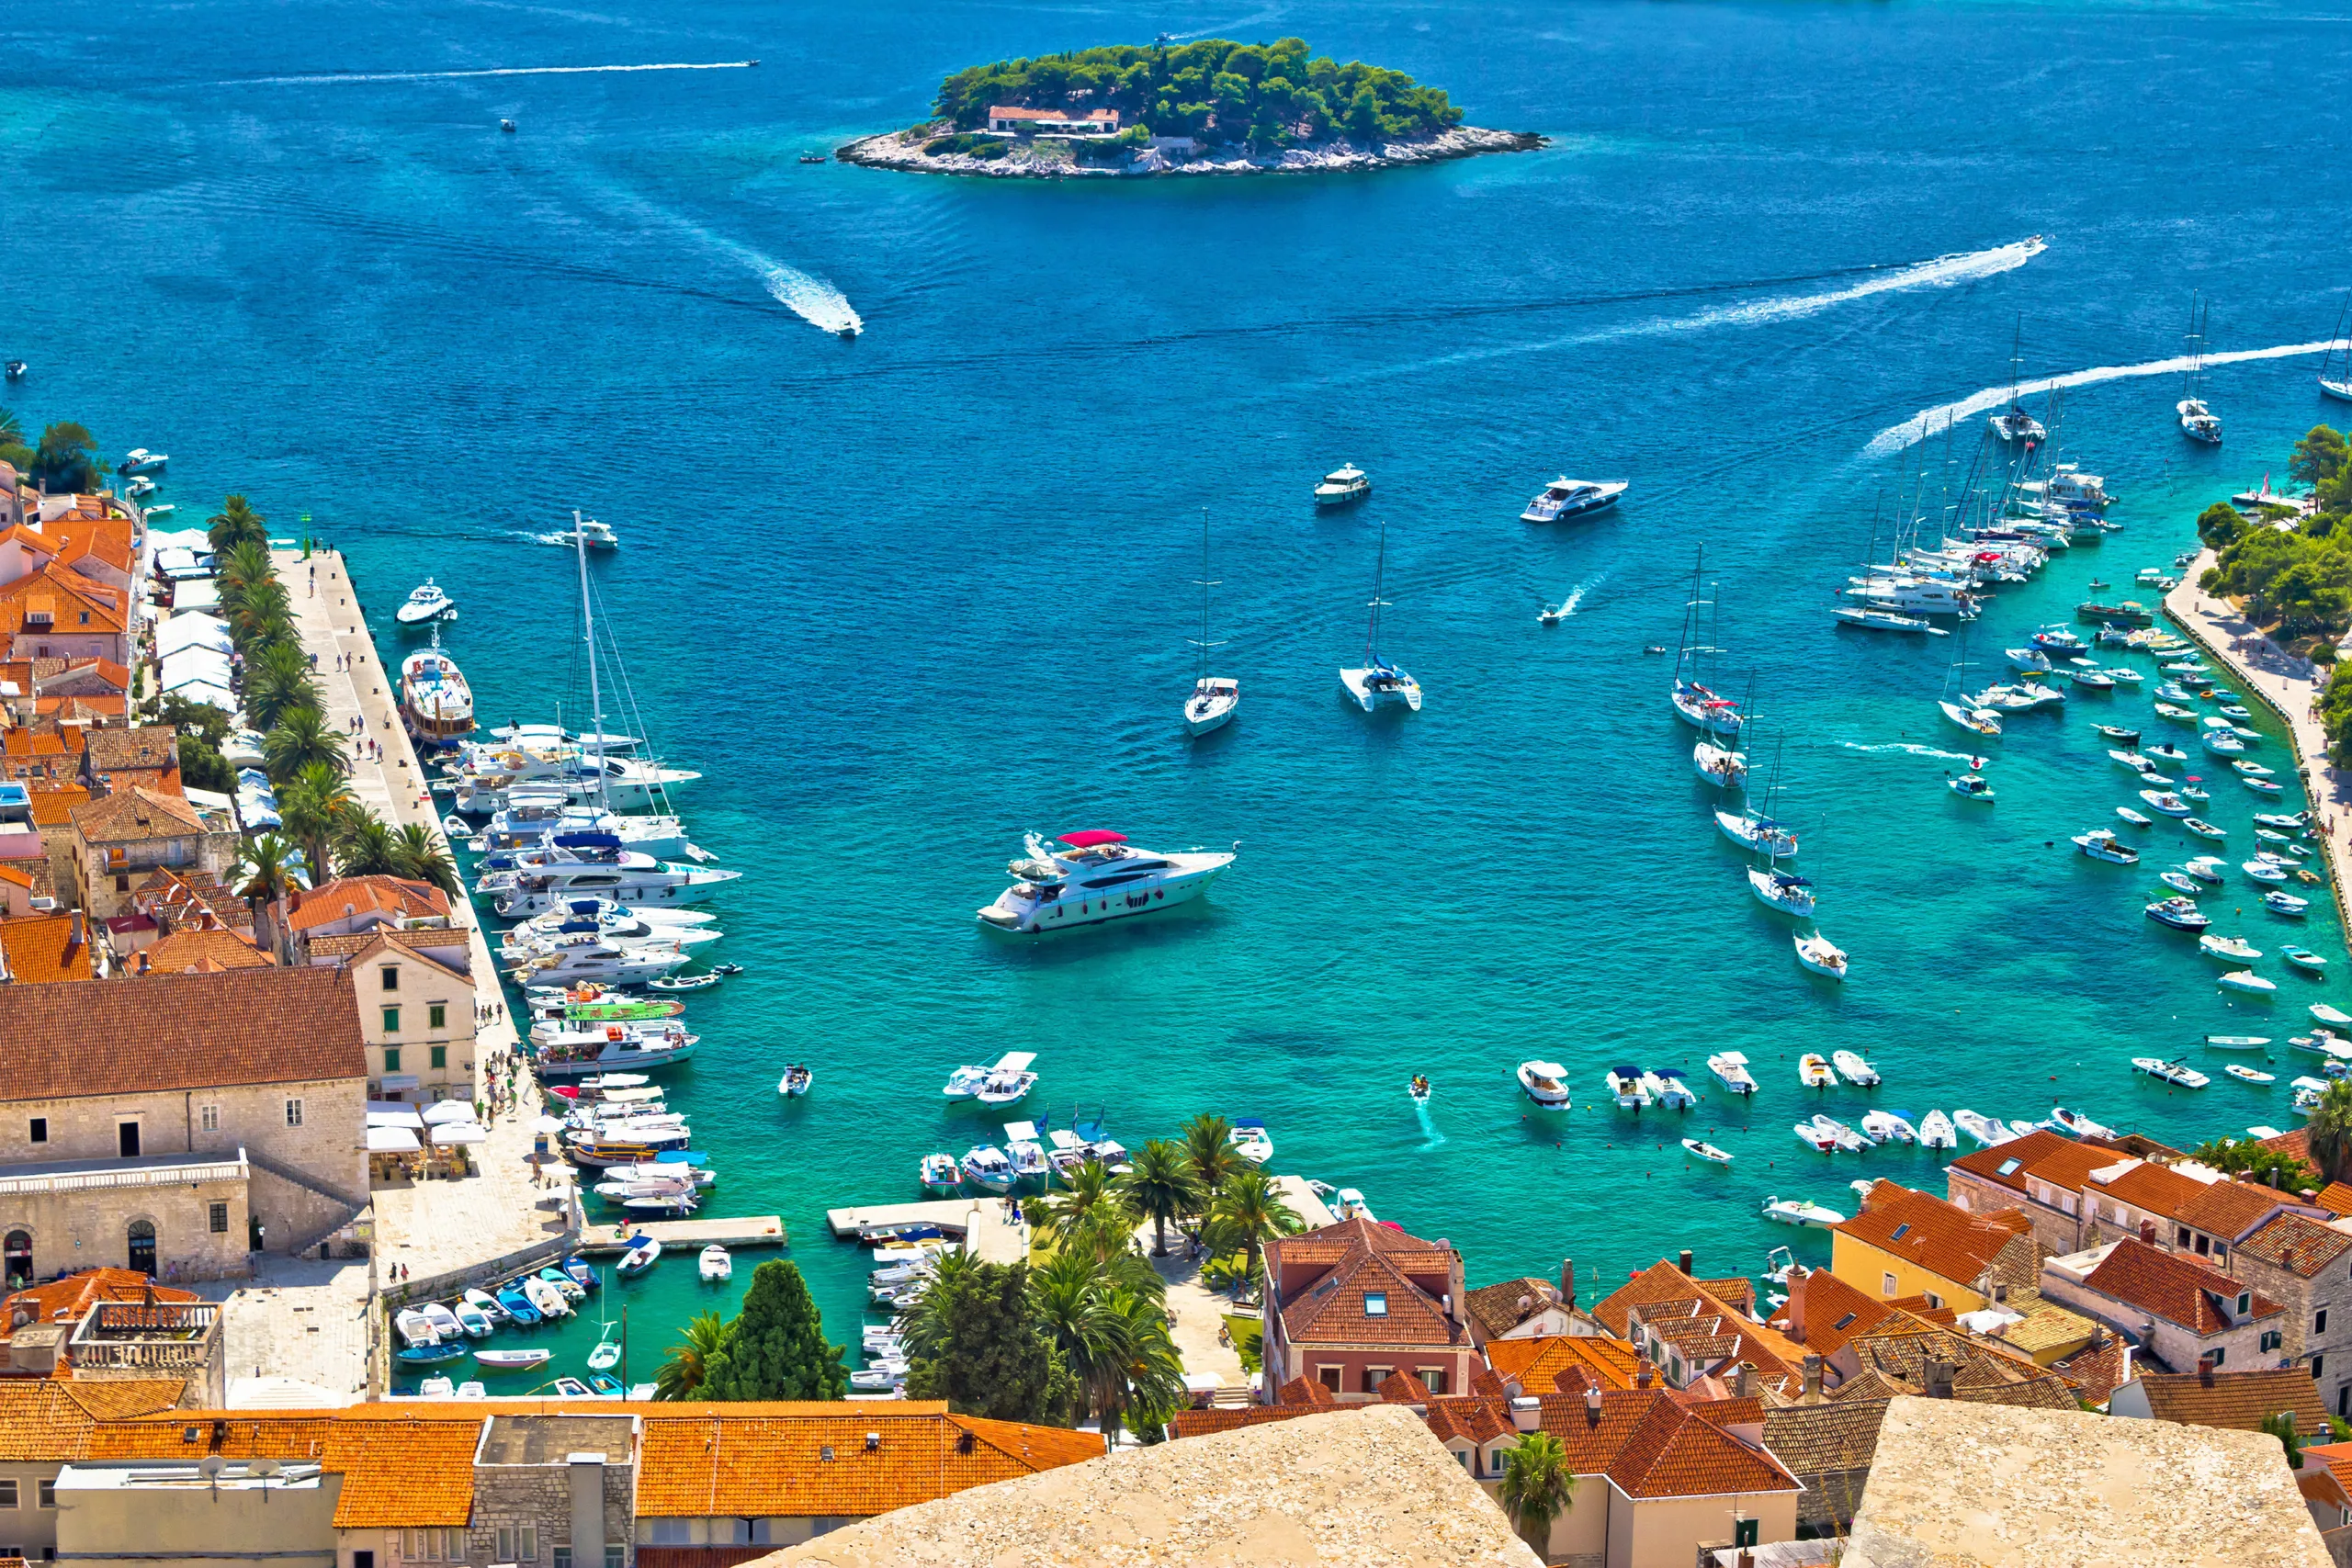 Aerial view of Dalmatian coast